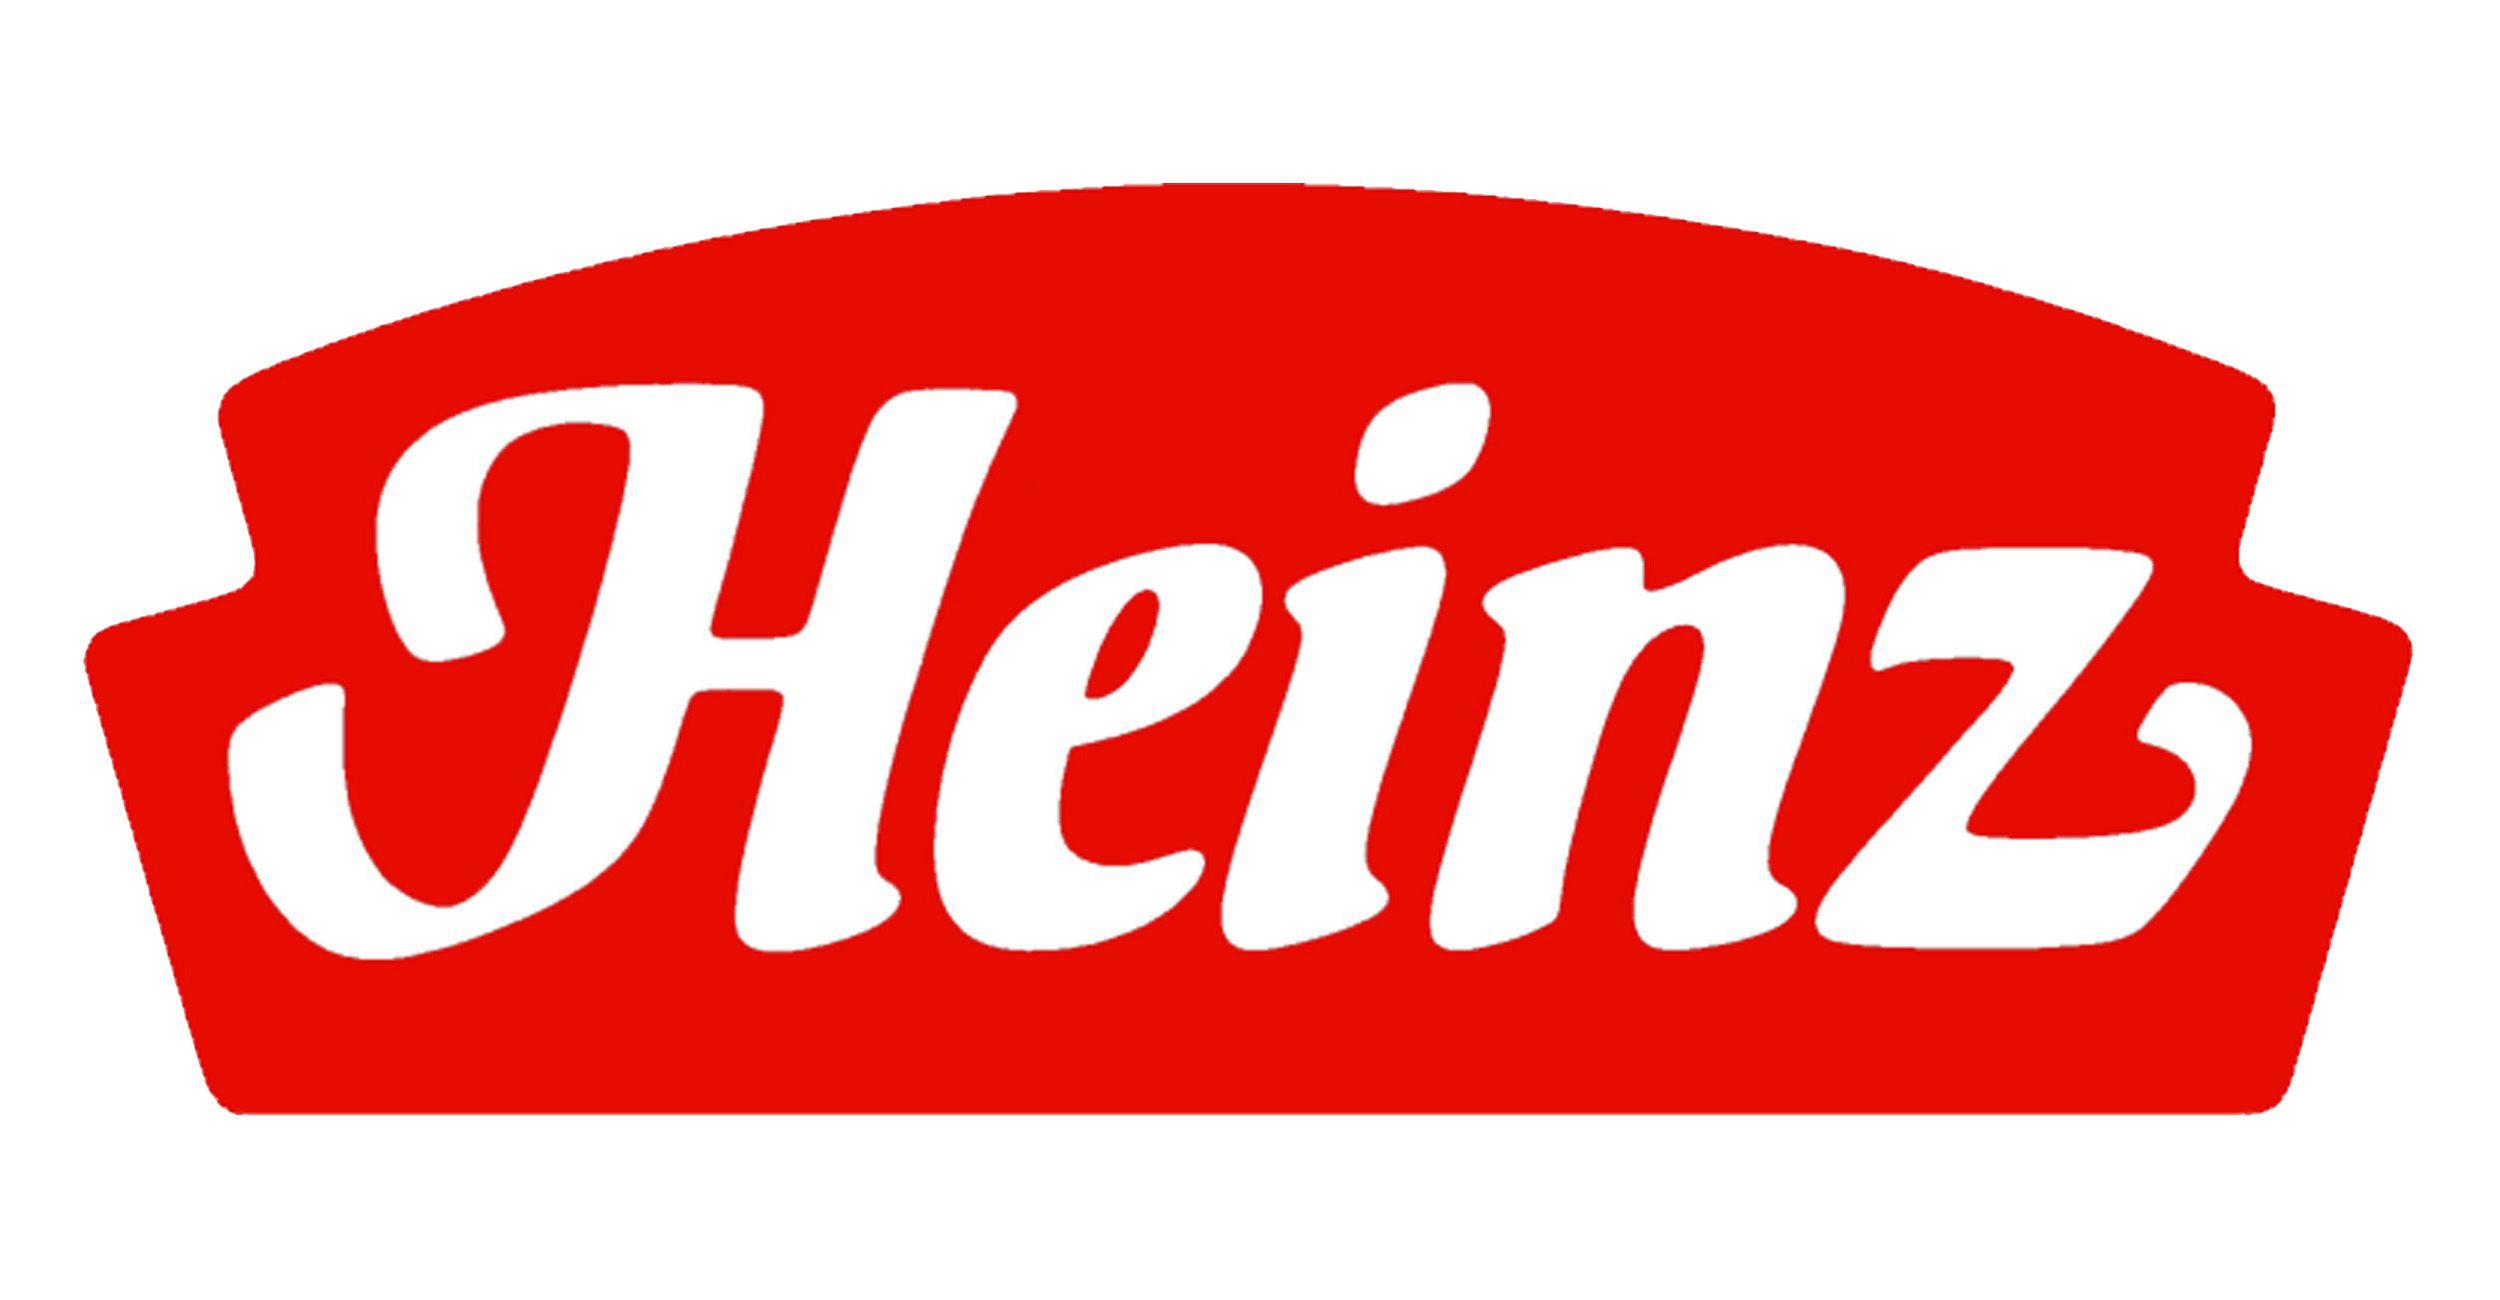 Red Keystone Logo - Heinz Logo, Heinz Symbol Meaning, History and Evolution